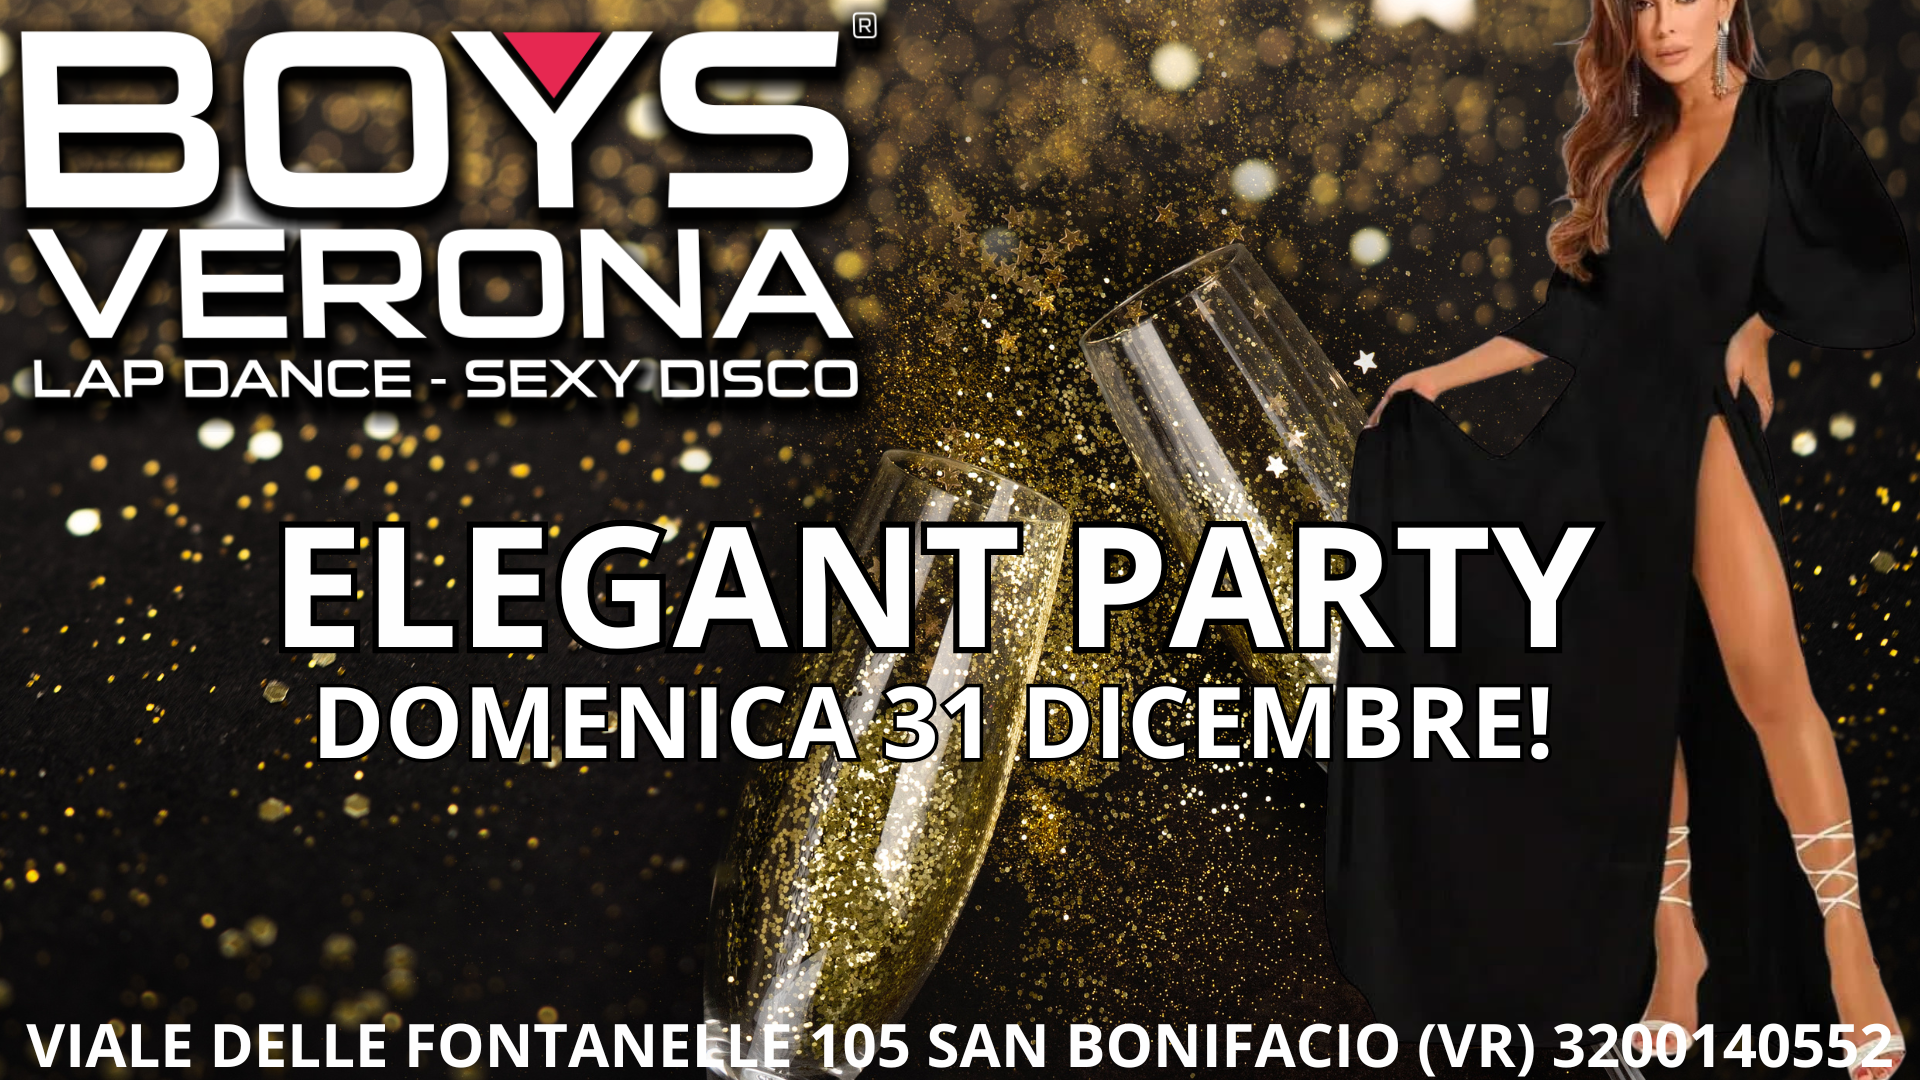 Boys Verona Lap Dance - Sexy disco ELEGANT PARTY